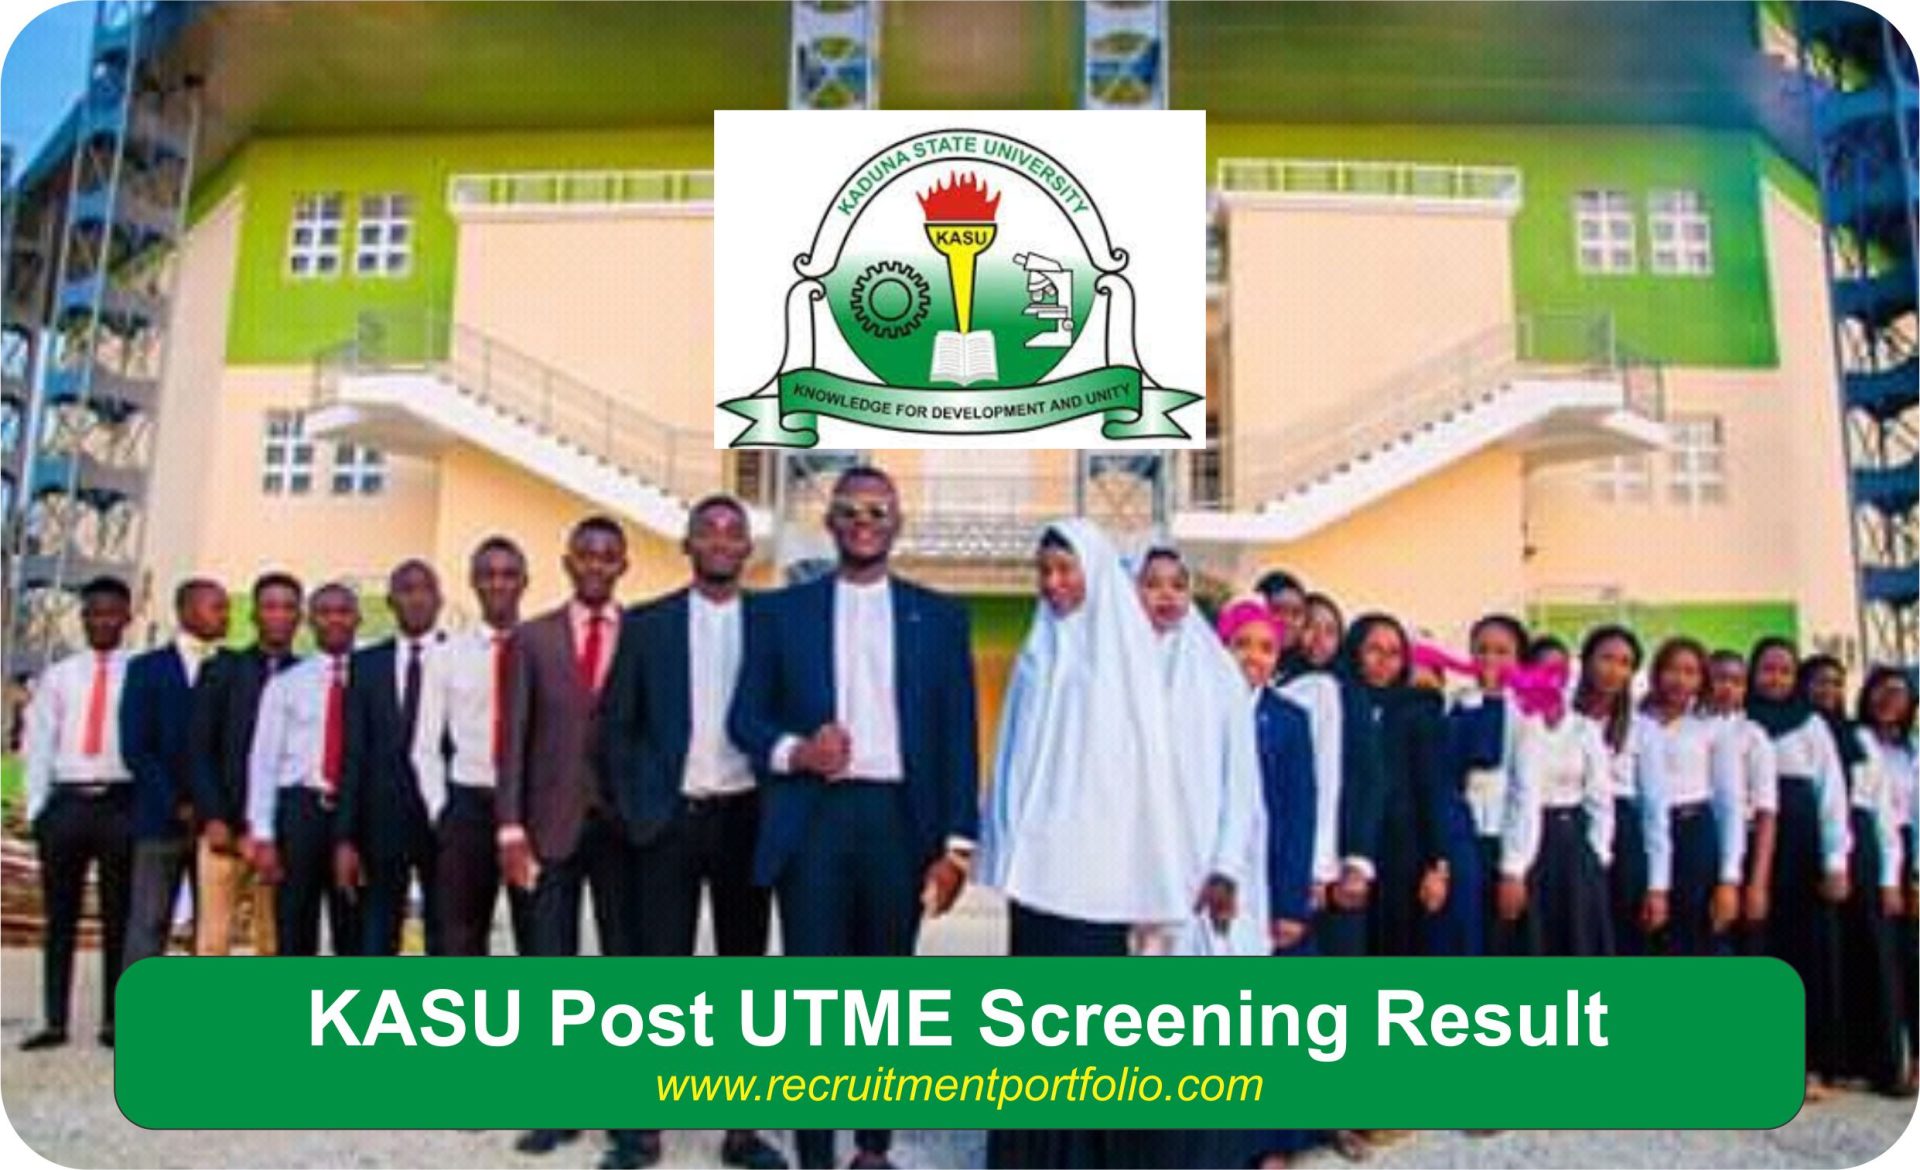 KASU Post UTME Screening Result (Successful Candidates)